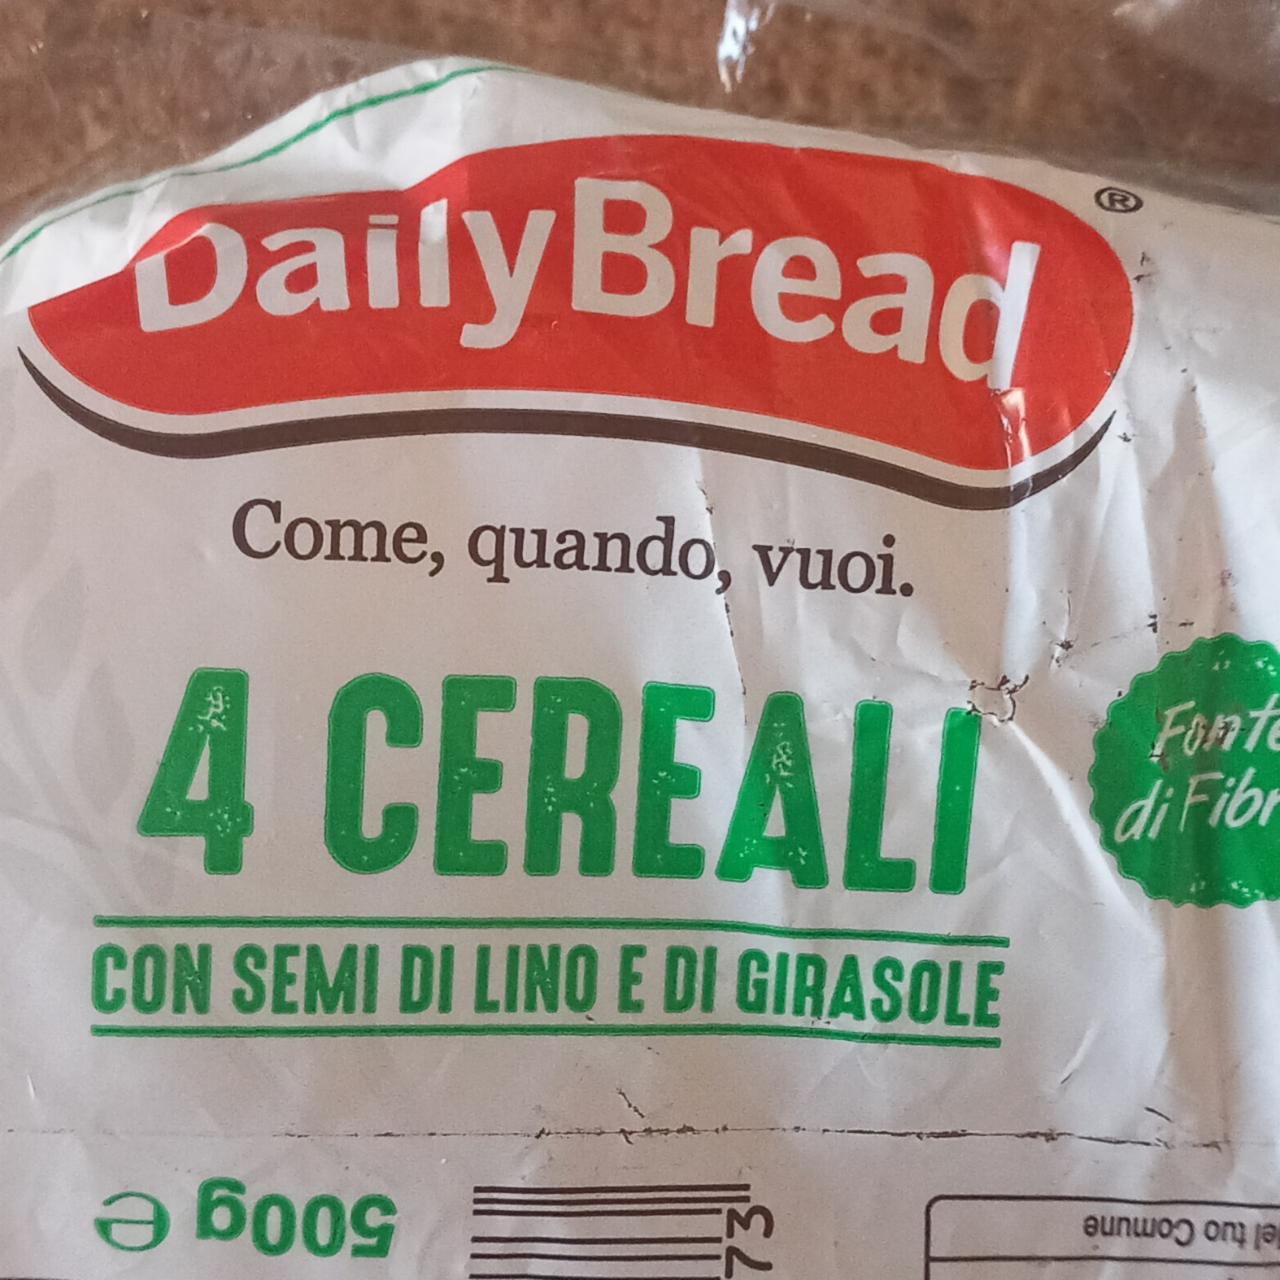 Fotografie - DailyBread panne 4 cereali